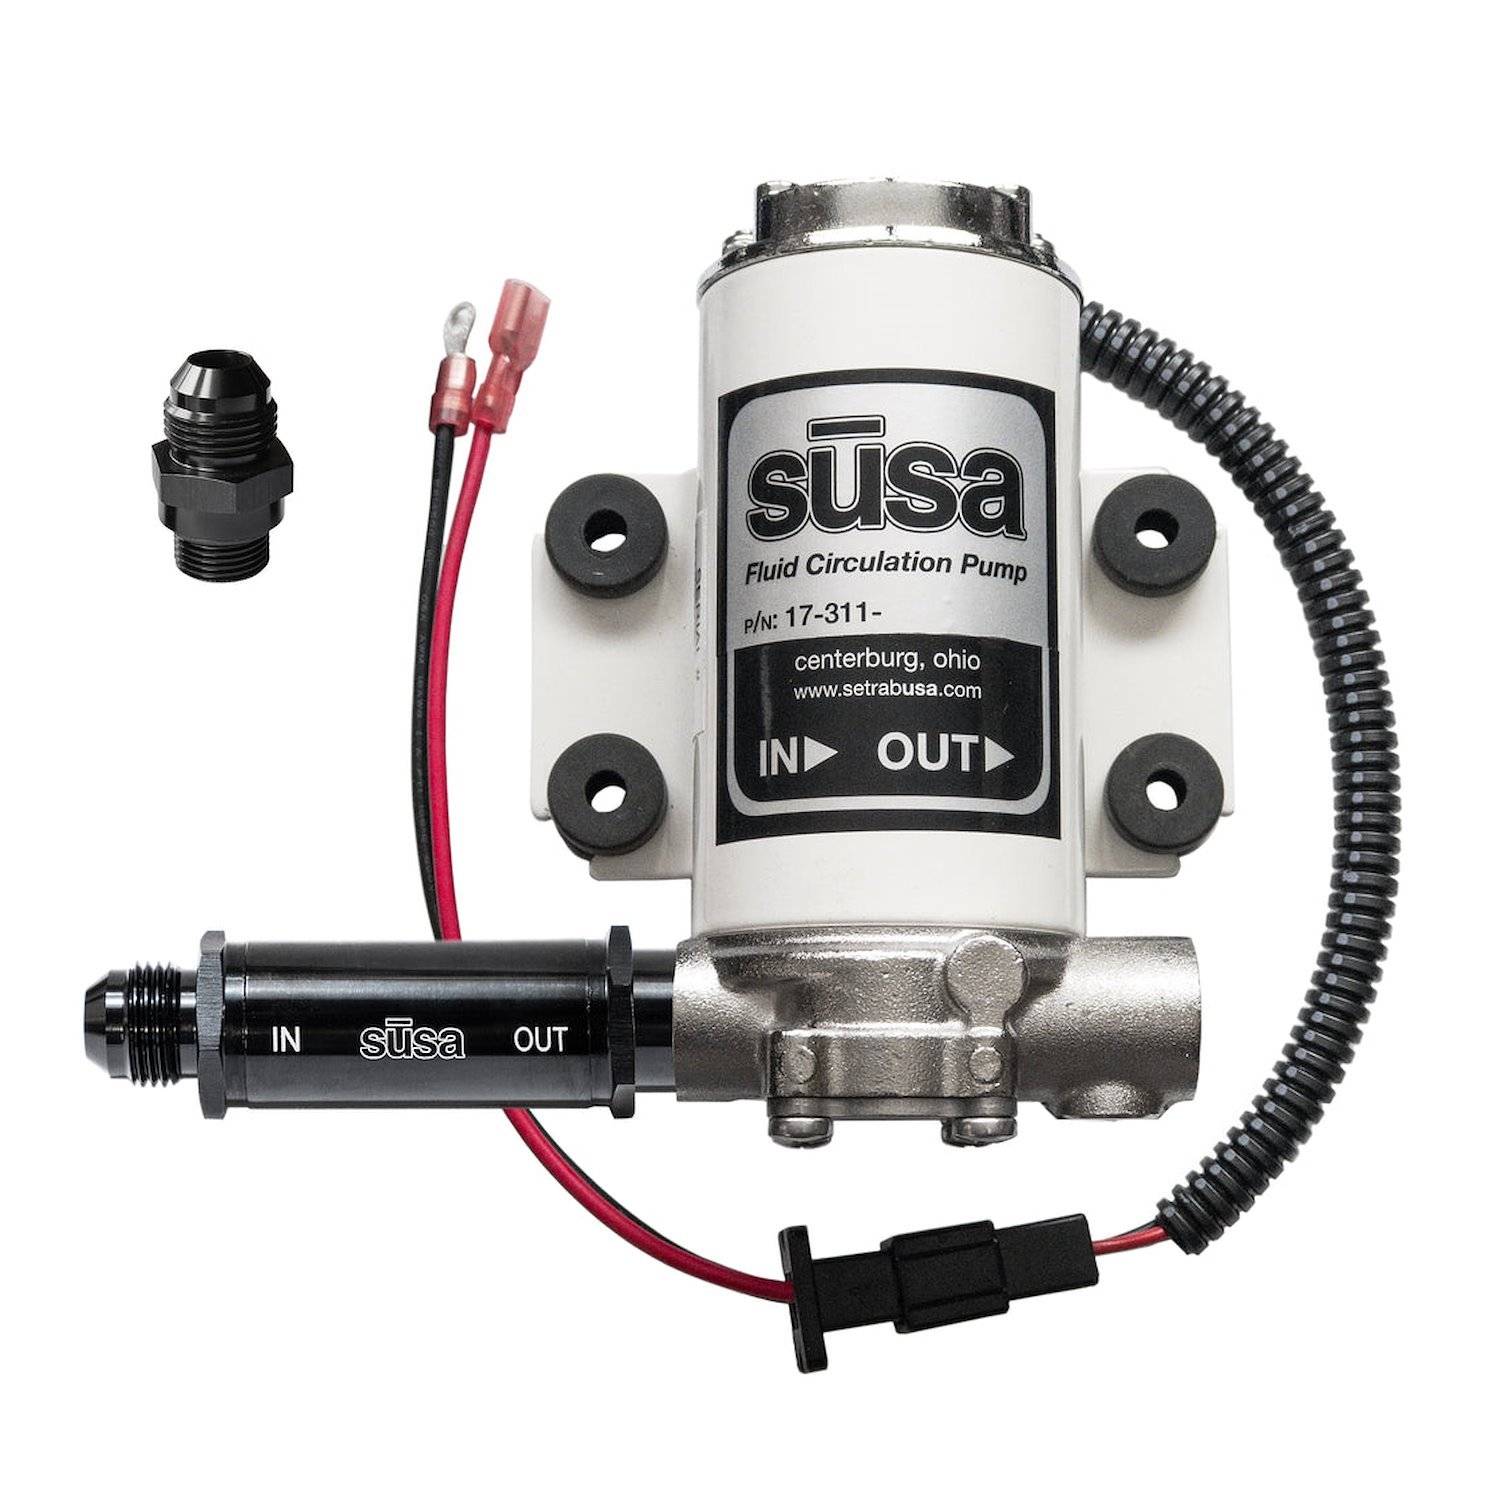 17-311-08-IF05 Mini Gear Oil Circulation Pump, Fluid Pump w/ AN 08 Fitting & AN08 Filter